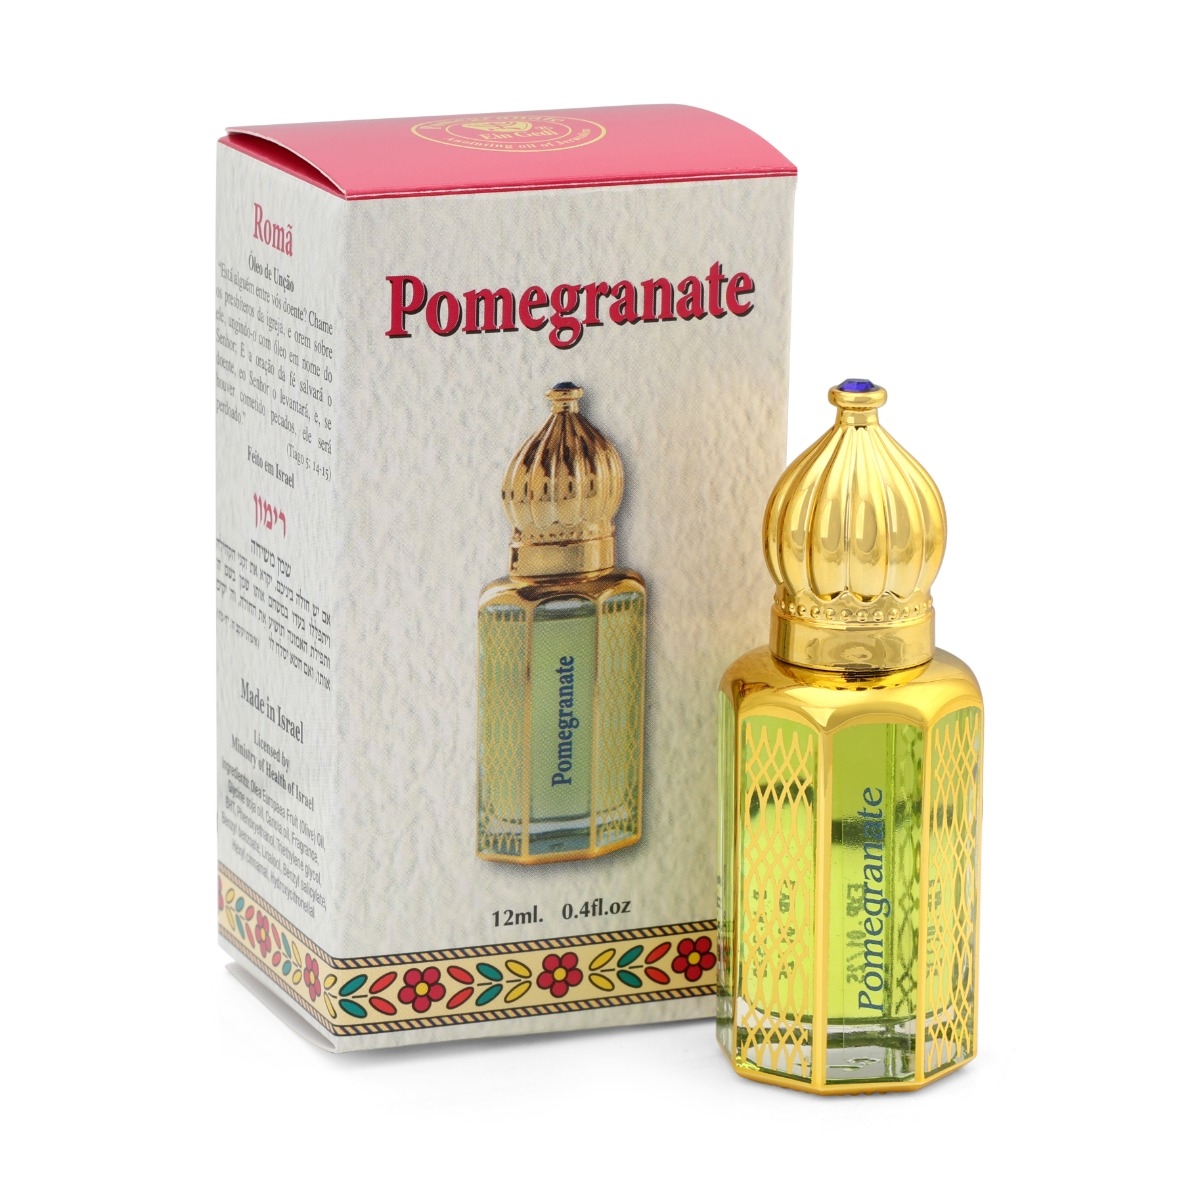 Pomegranate Oriental-Design 12 ml Anointing Oil - 1